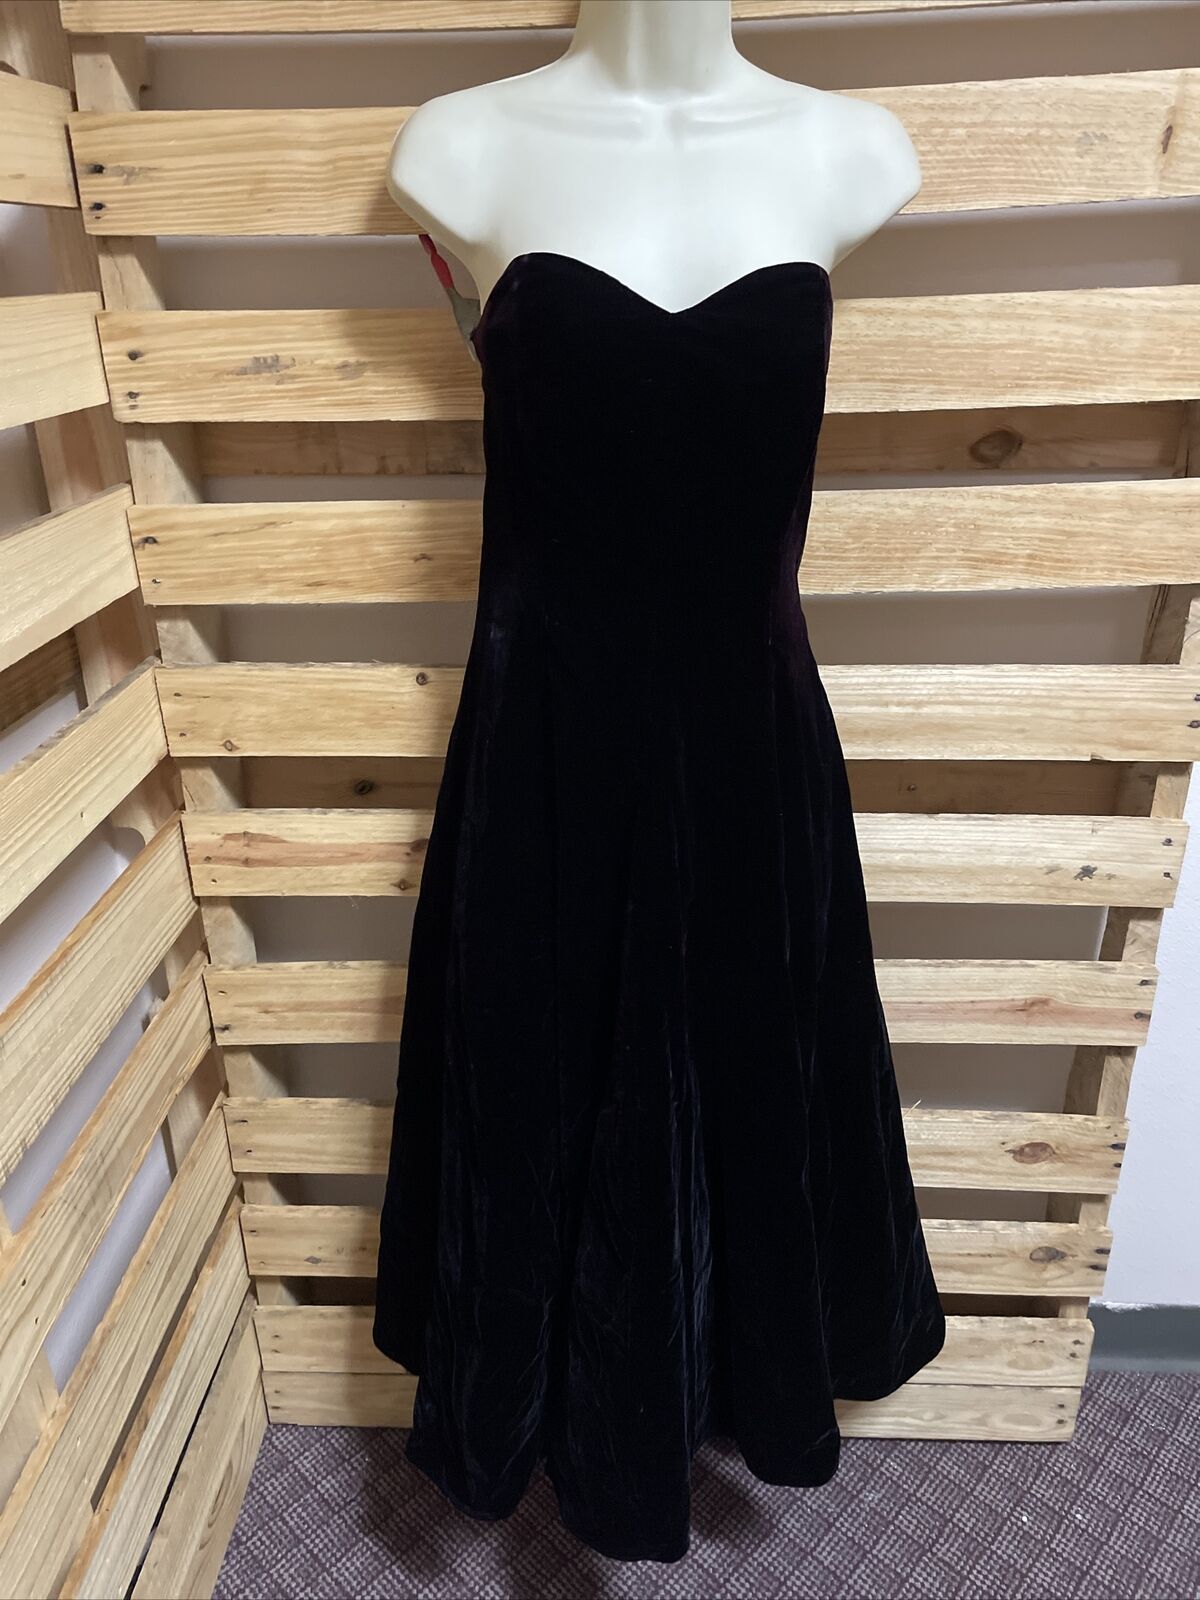 Patra Black Velvet Ankle Length Dress with Purple Petticoat Woman\'s Size 7/8 KG